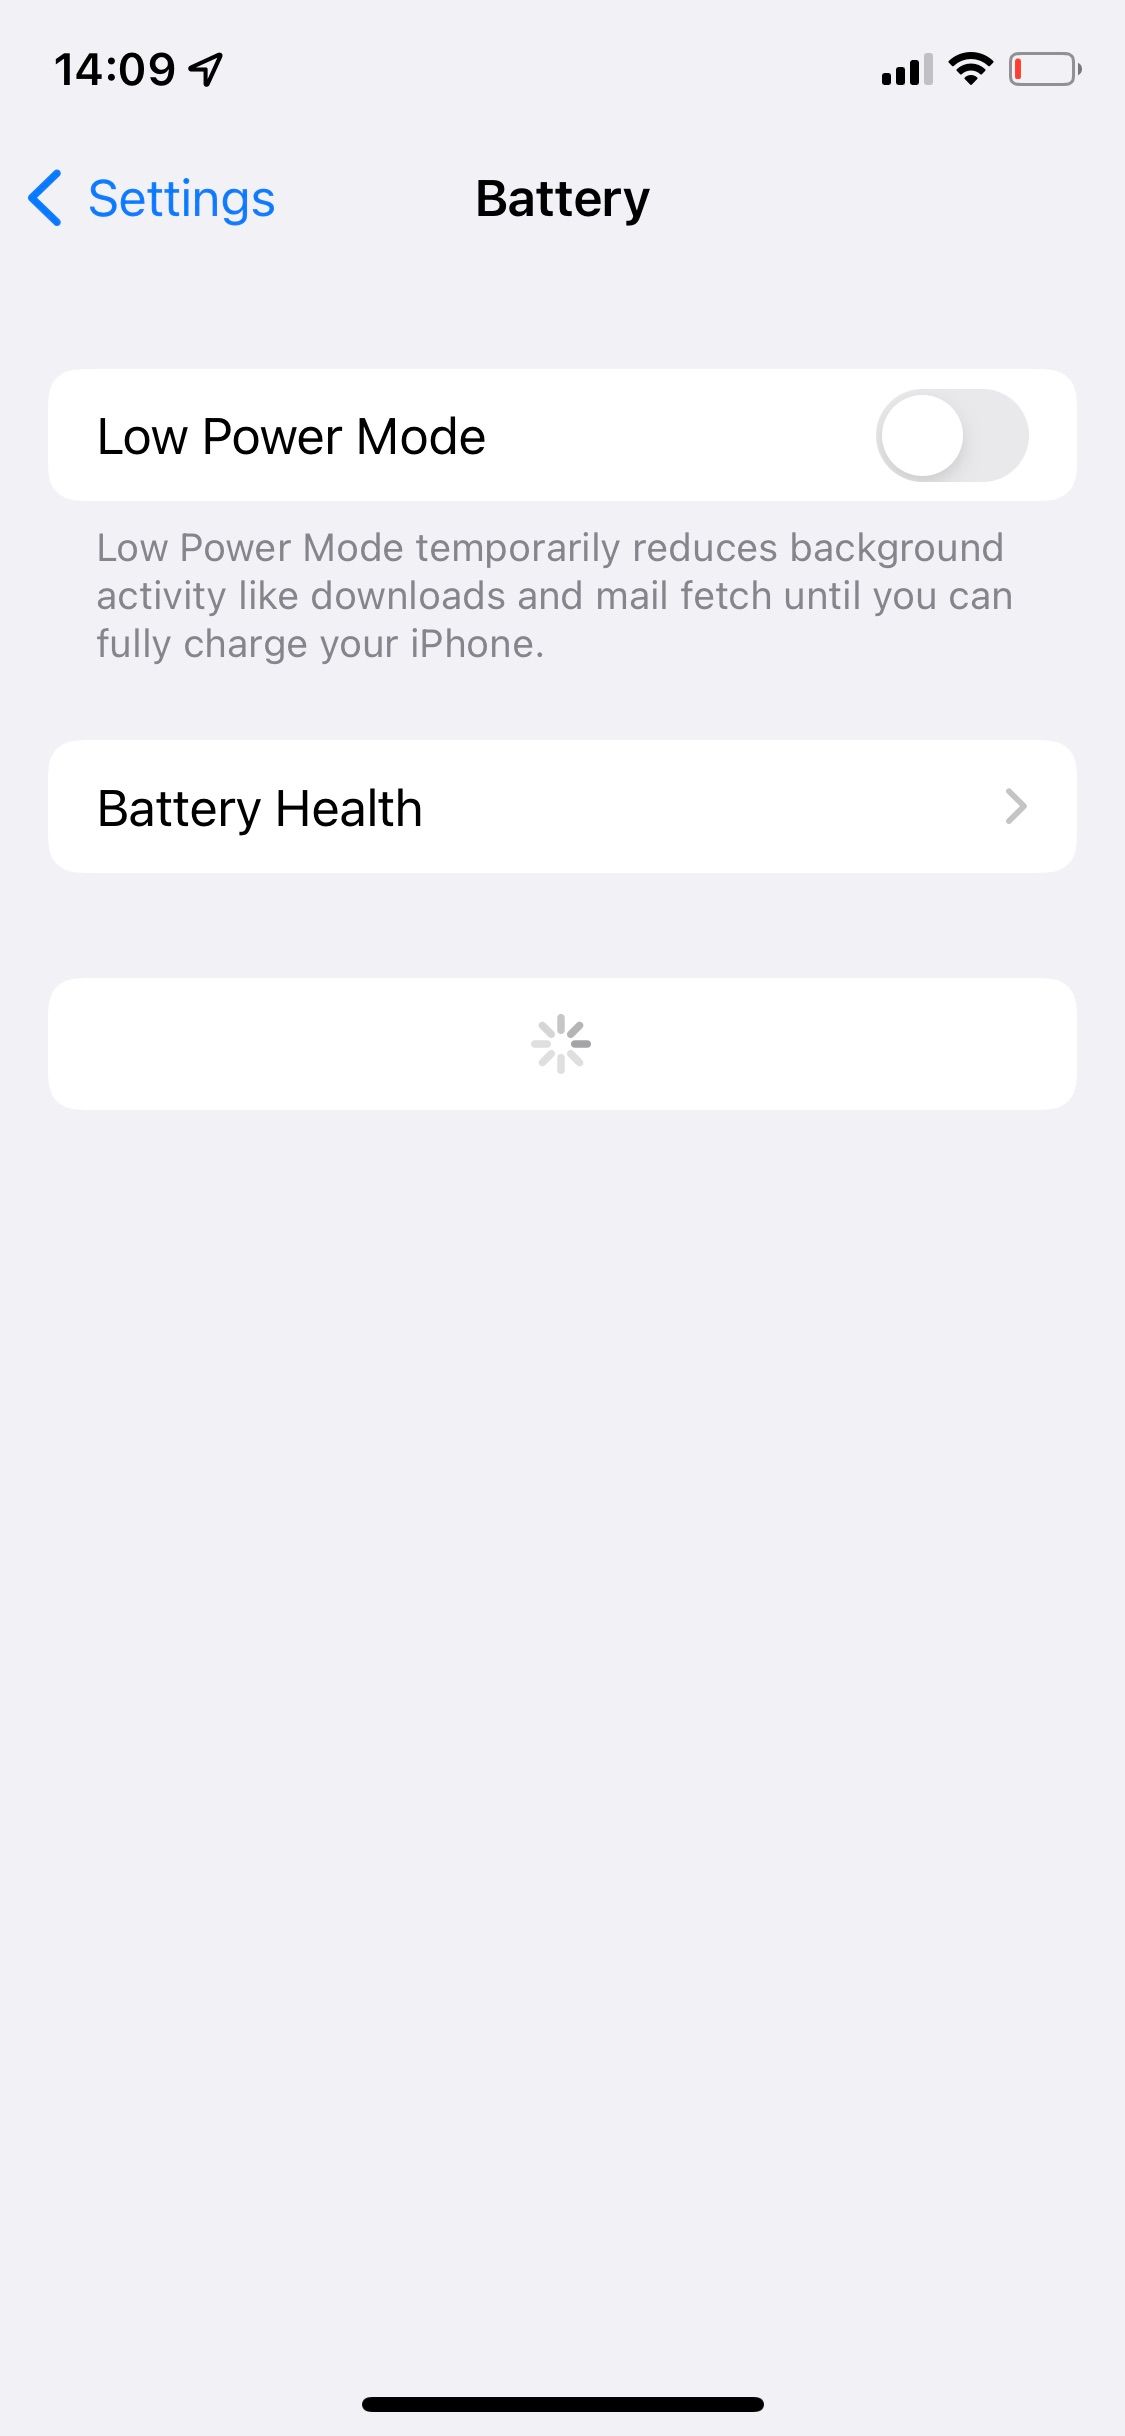 Battery settings in the Settings app